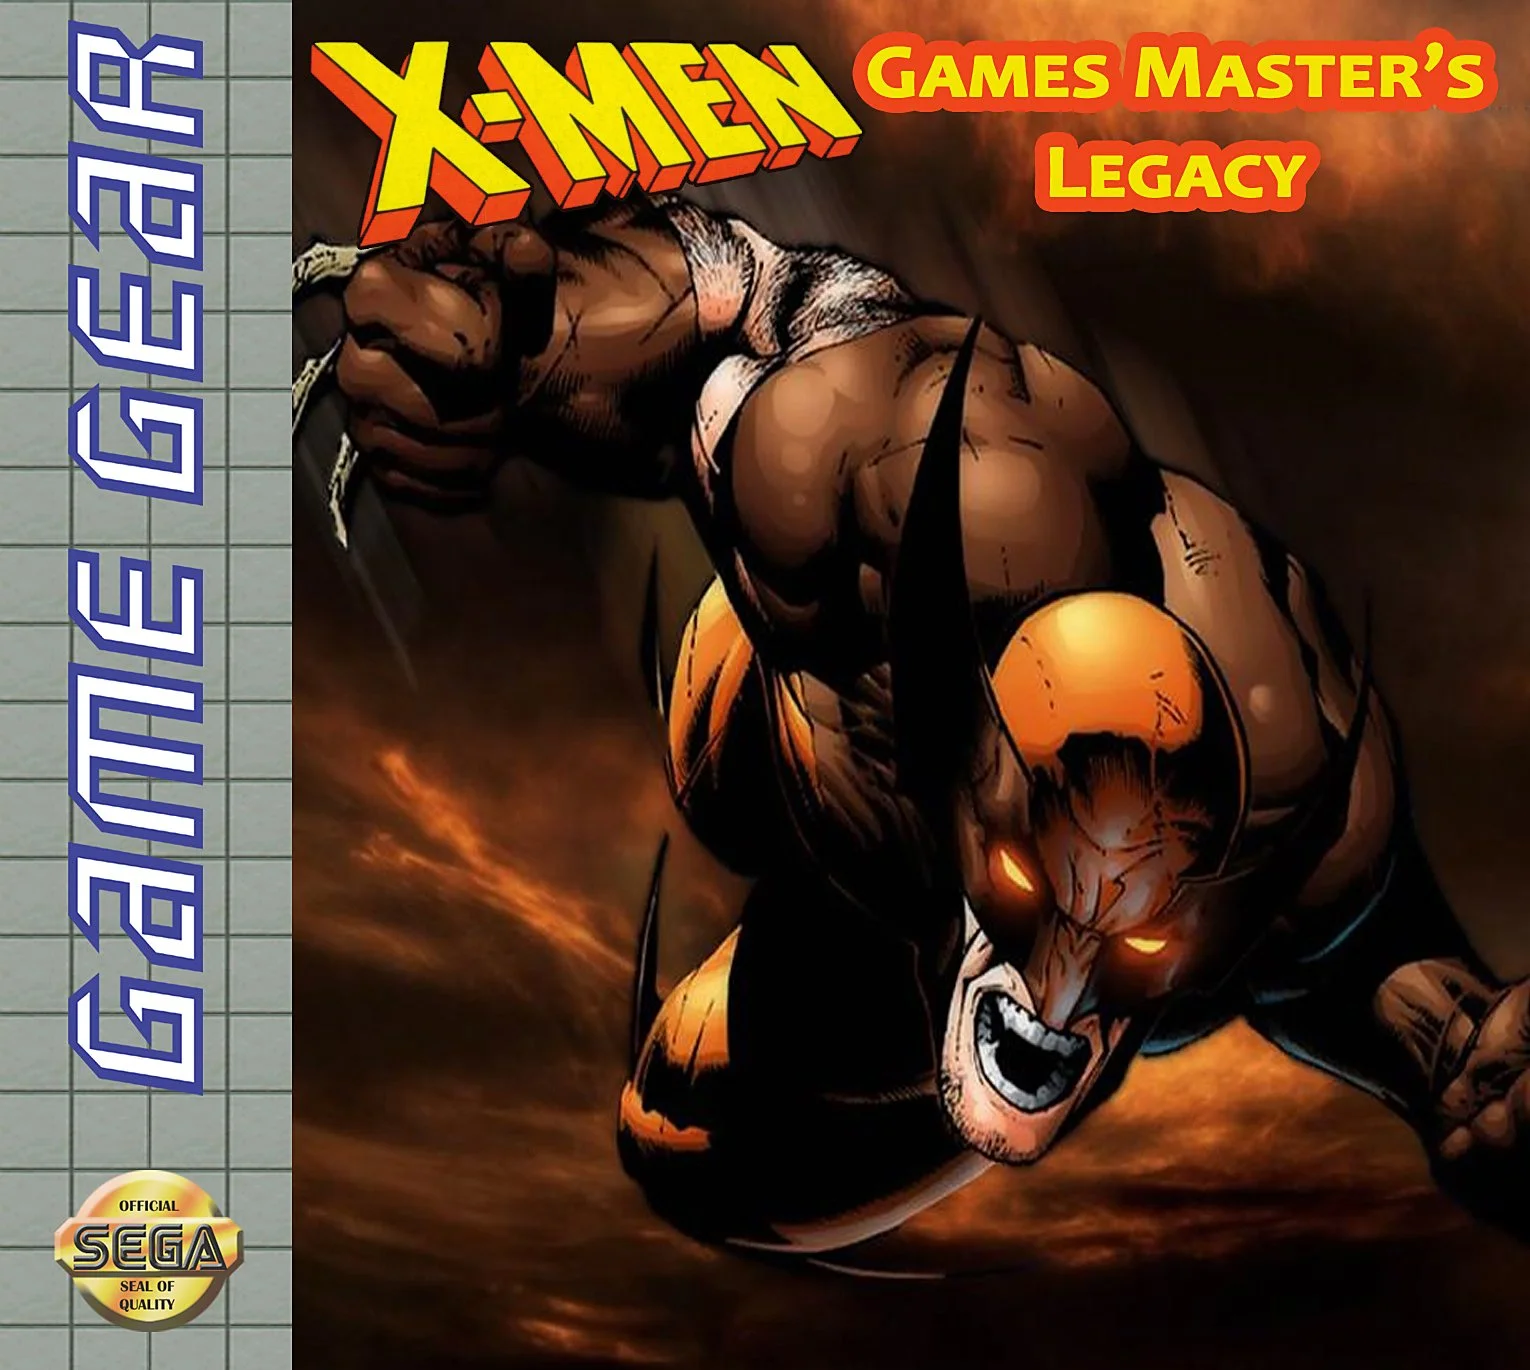 X-Men: Games Master's Legacy